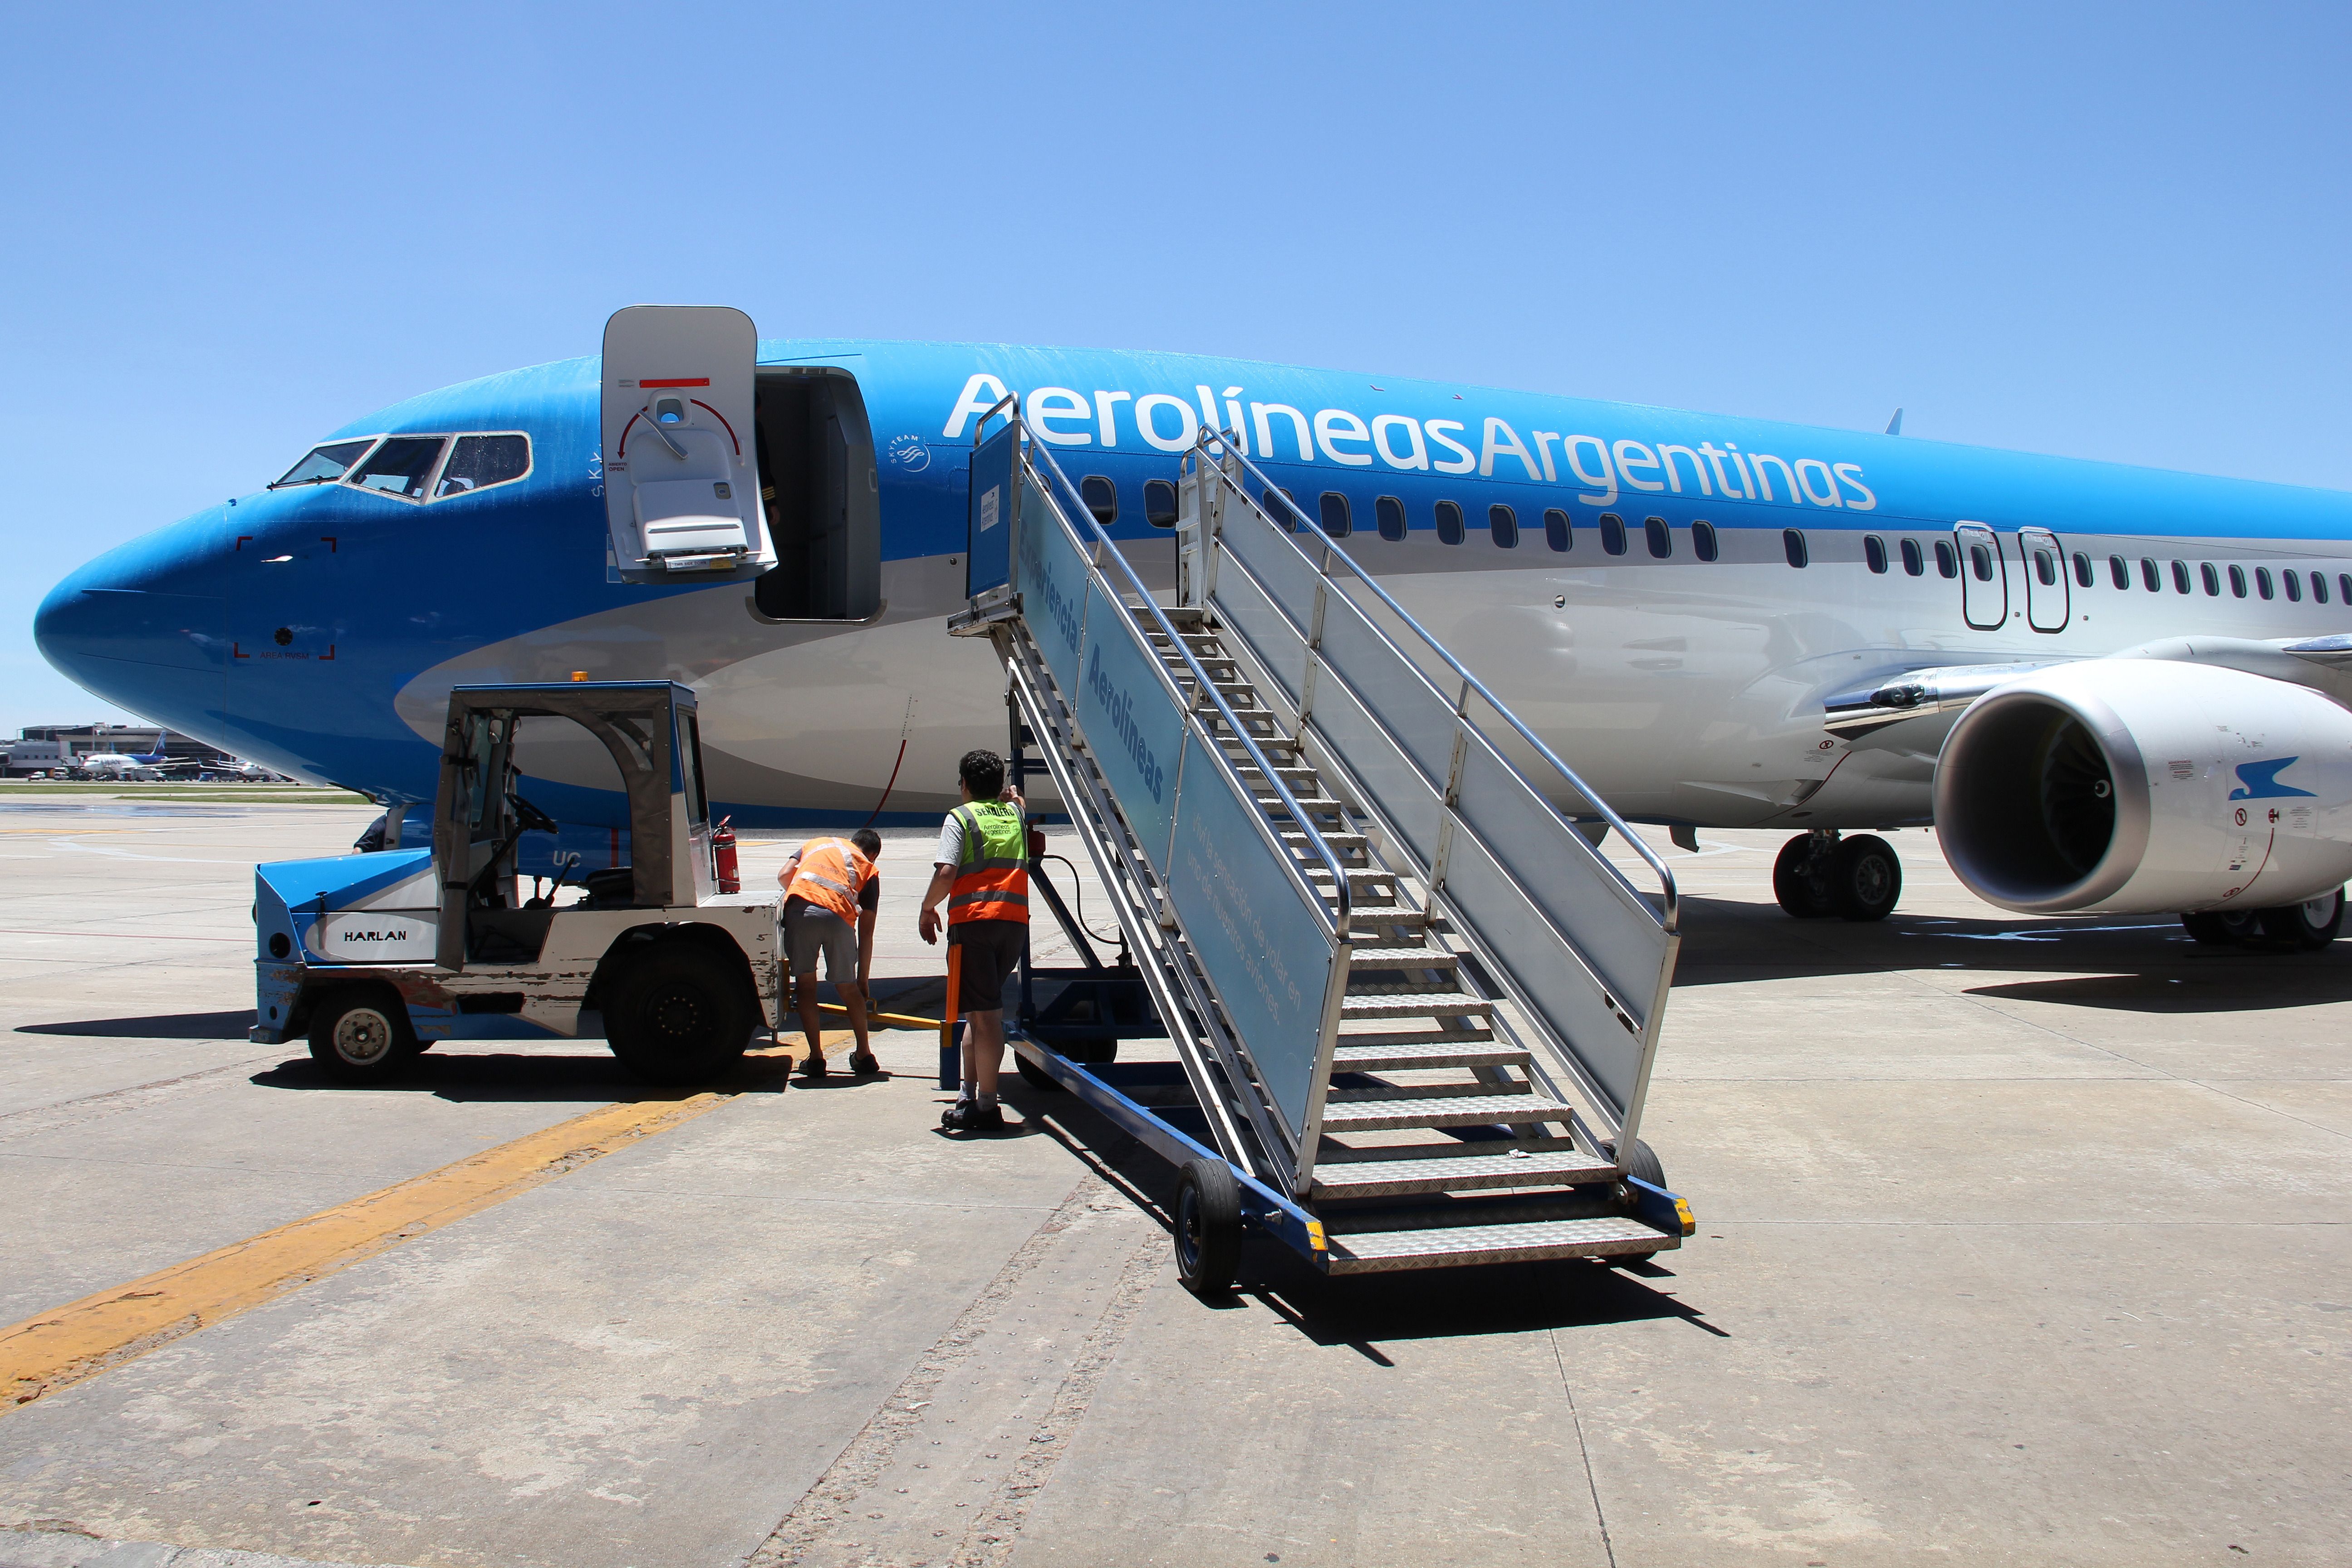 An Aerolineas Argentinas aircraft parked 